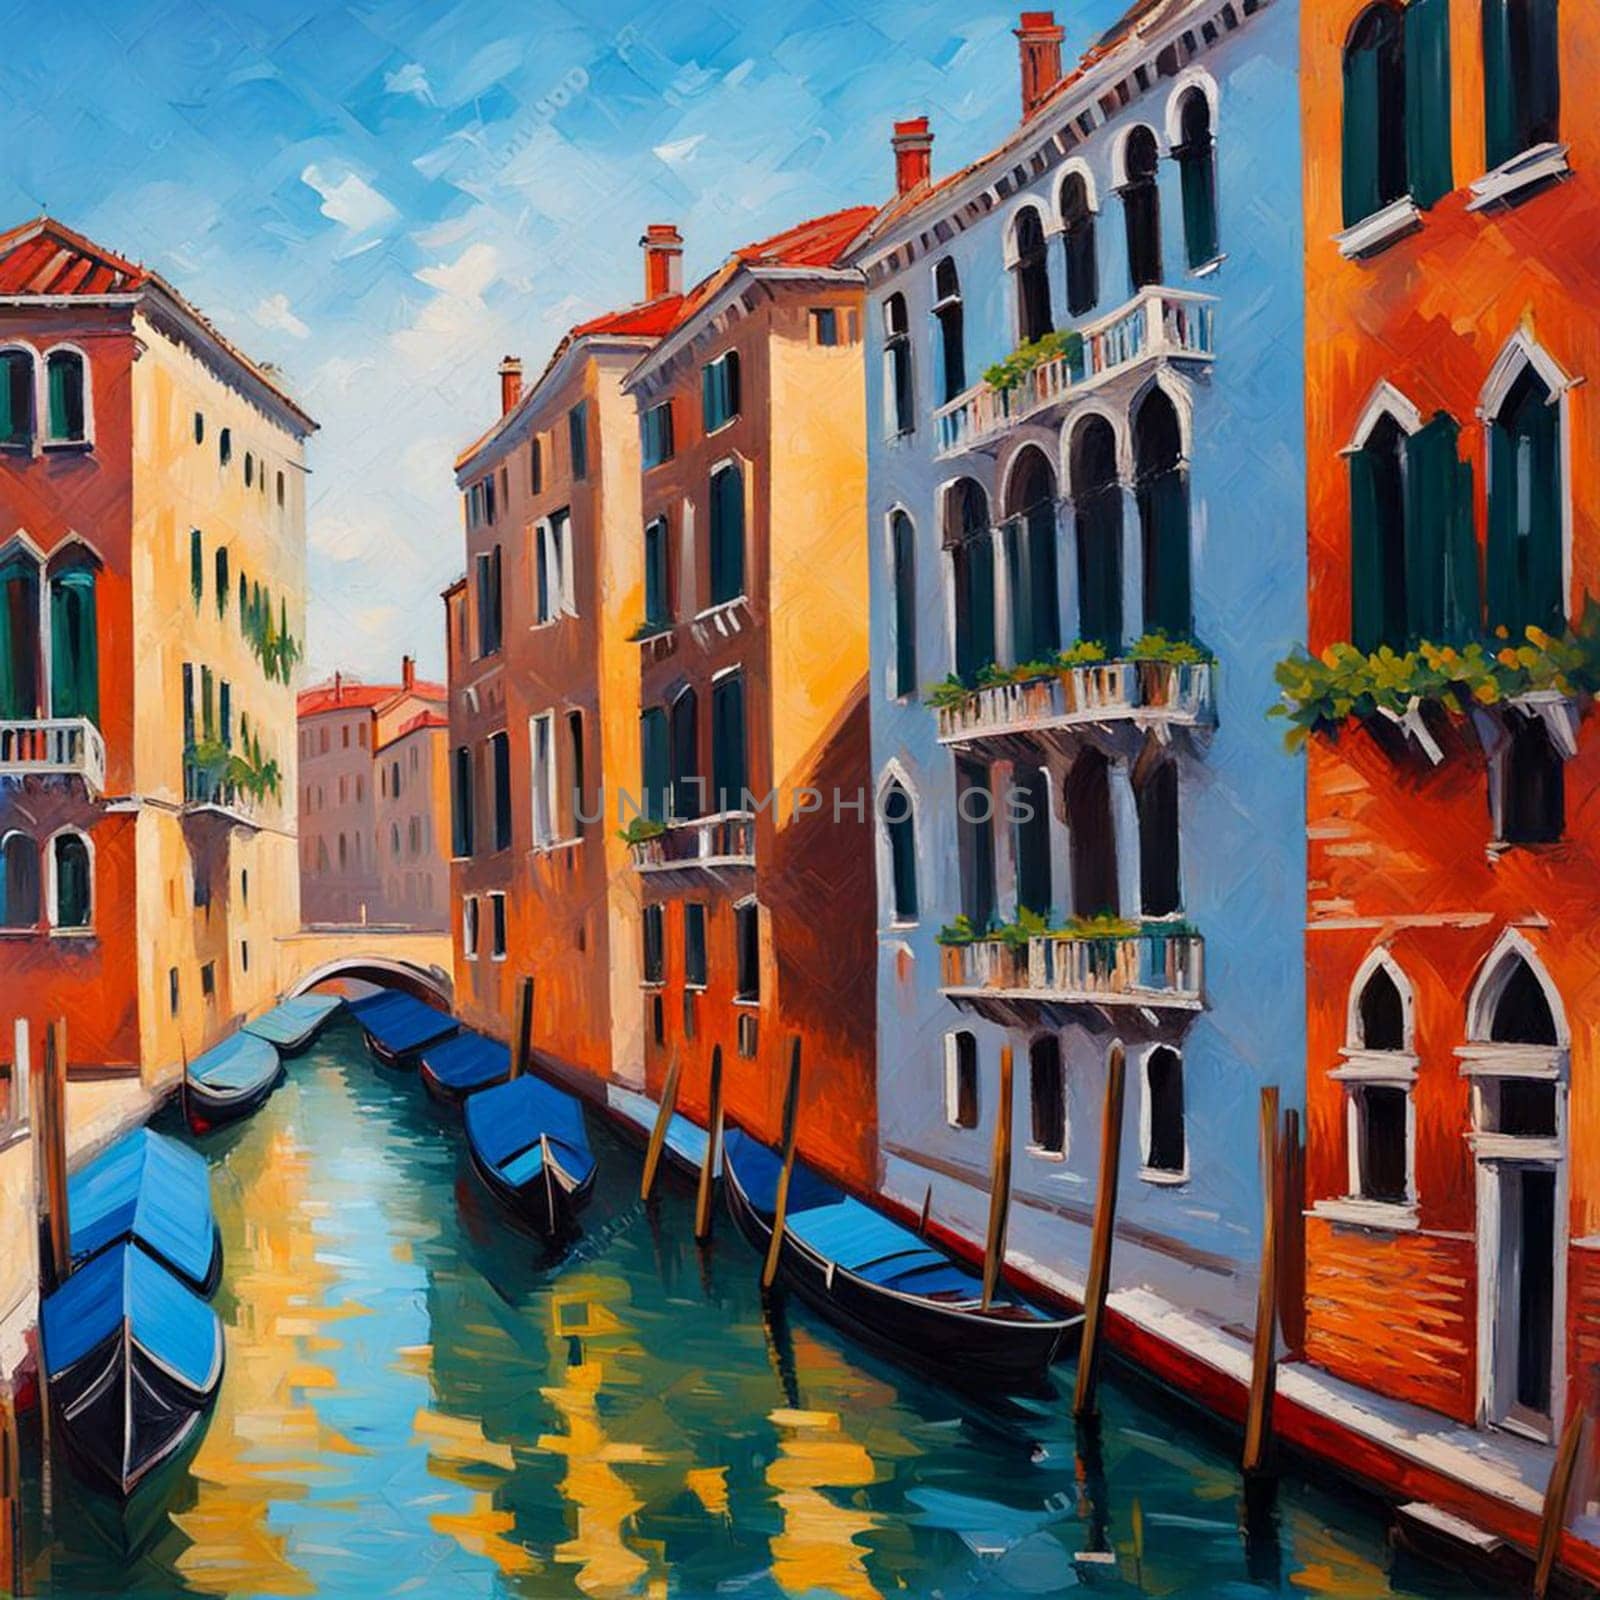 Venetian Splendor: Gondolas Gliding on the Grand Canal by Vailatese46